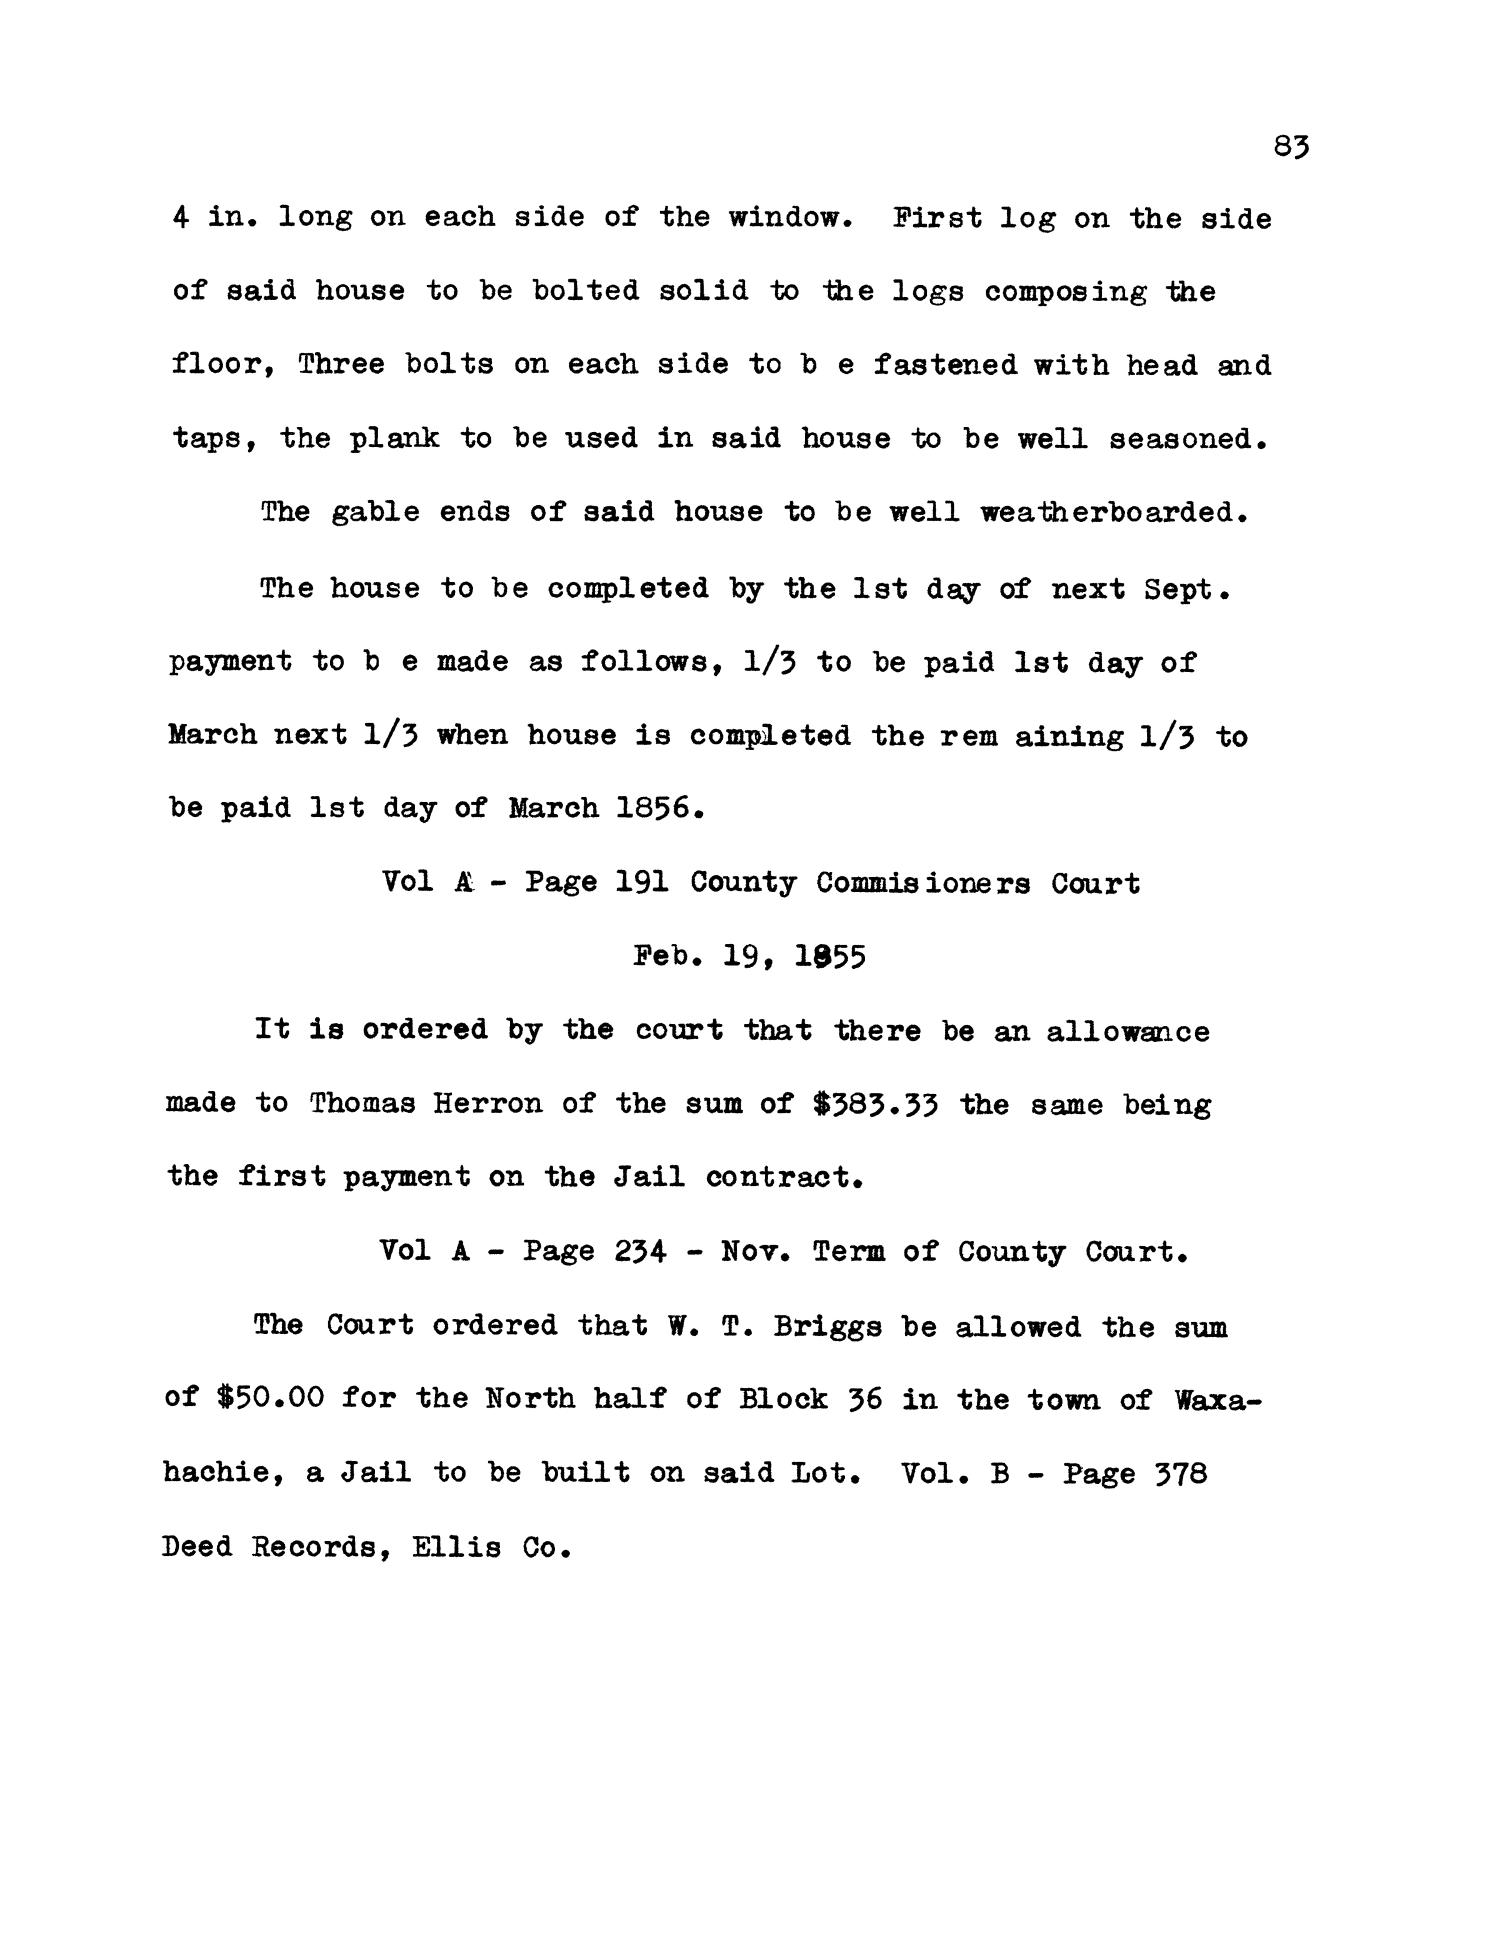 Texas Genealogical Records, Ellis County, Volume 17, 1800-1963
                                                
                                                    83
                                                